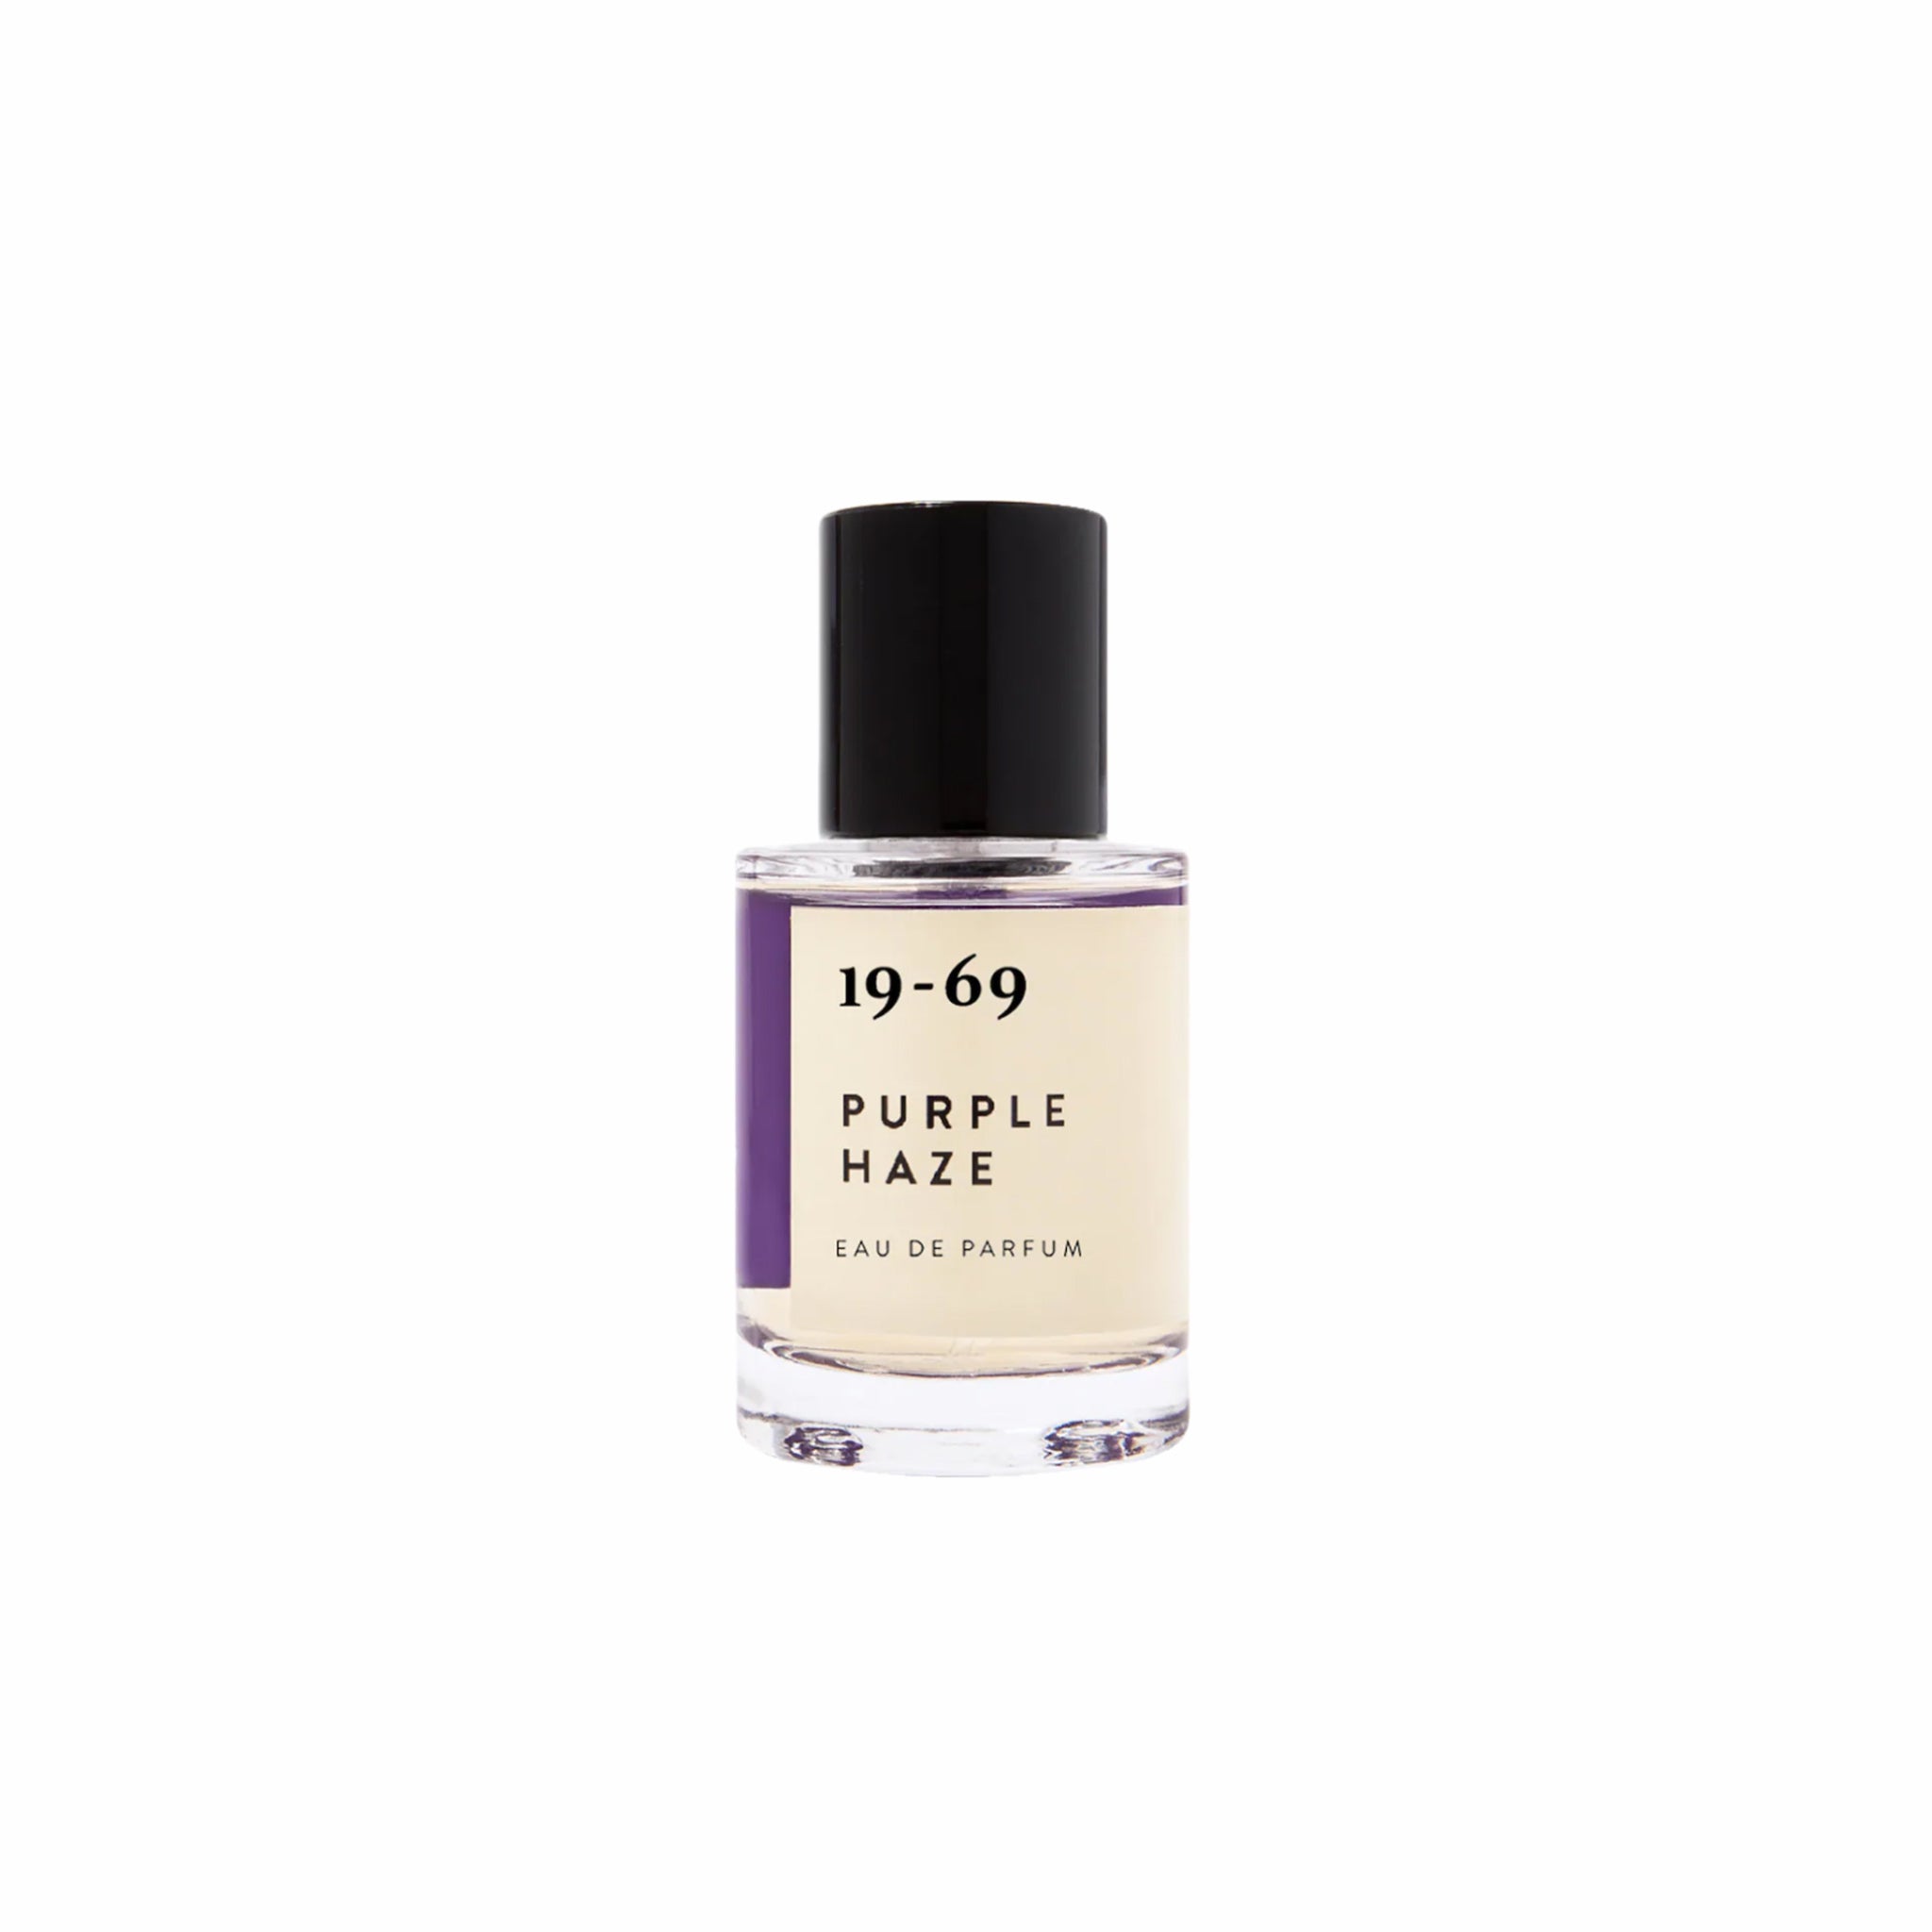 19-69, 19-69 Purple Haze Eau de Parfum (30 ml)